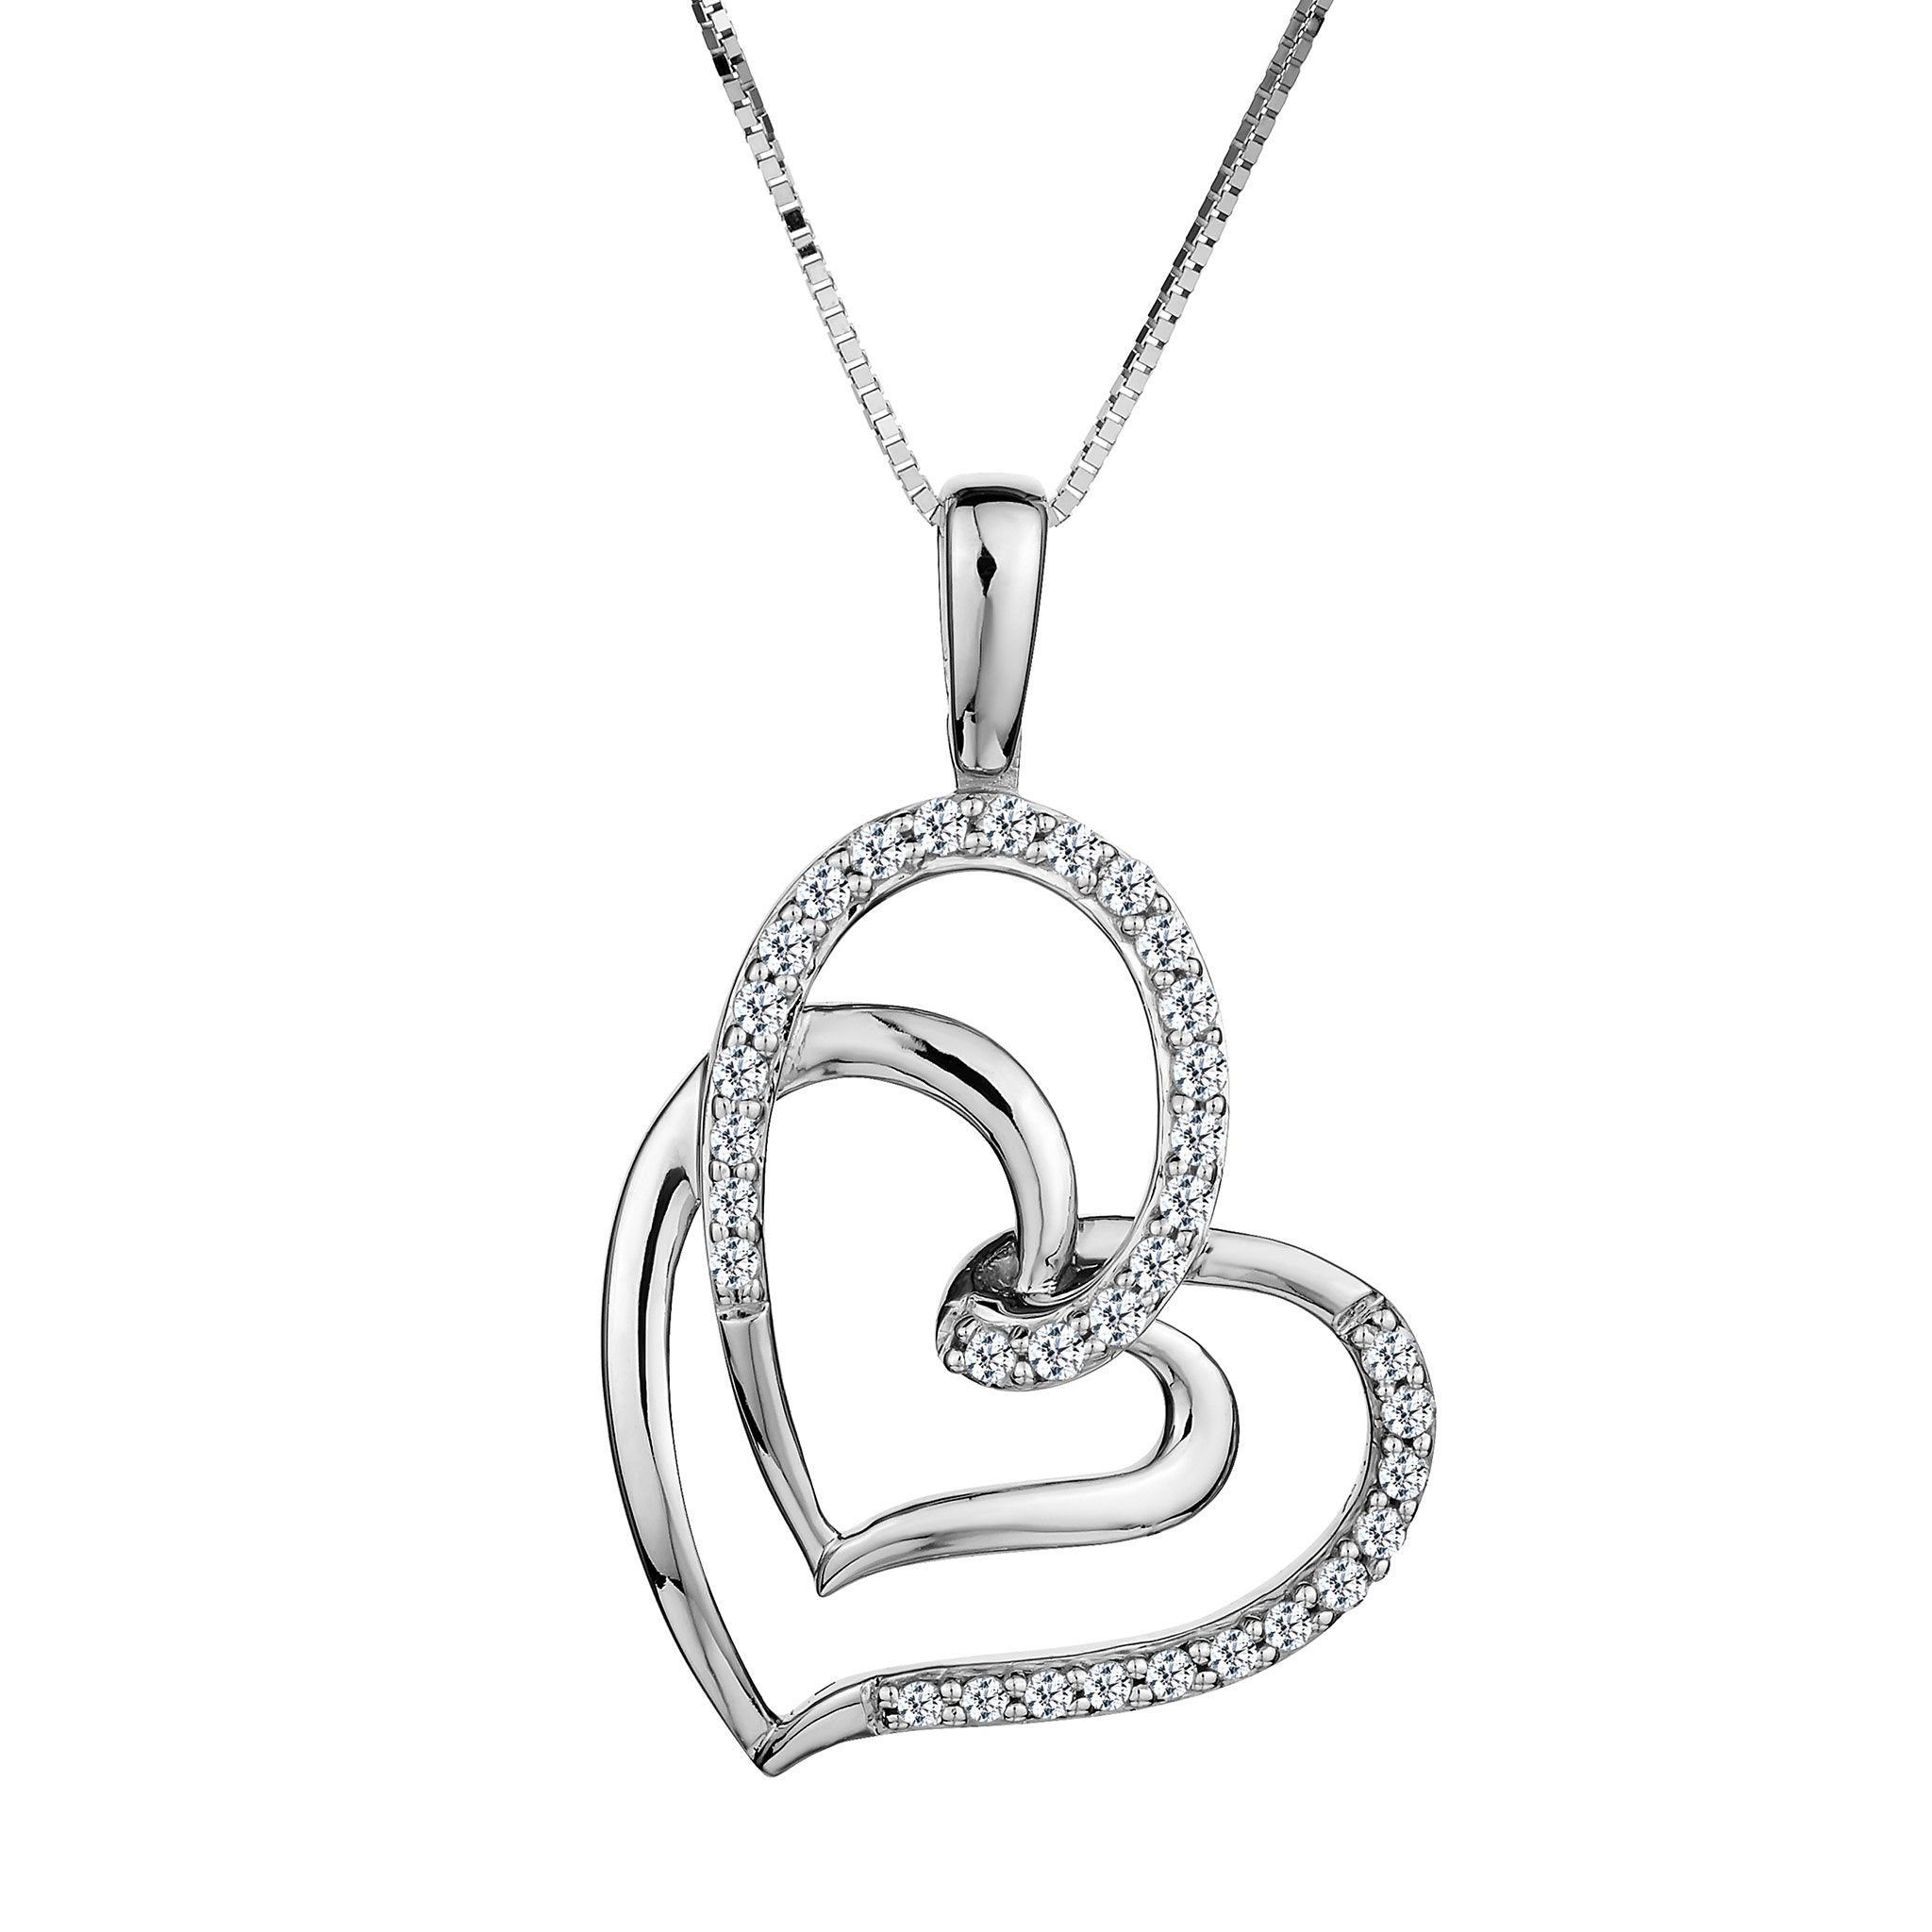 .16 Carat Diamond Double Heart Pendant,  10kt White Gold. Necklaces and Pendants. Griffin Jewellery Designs.